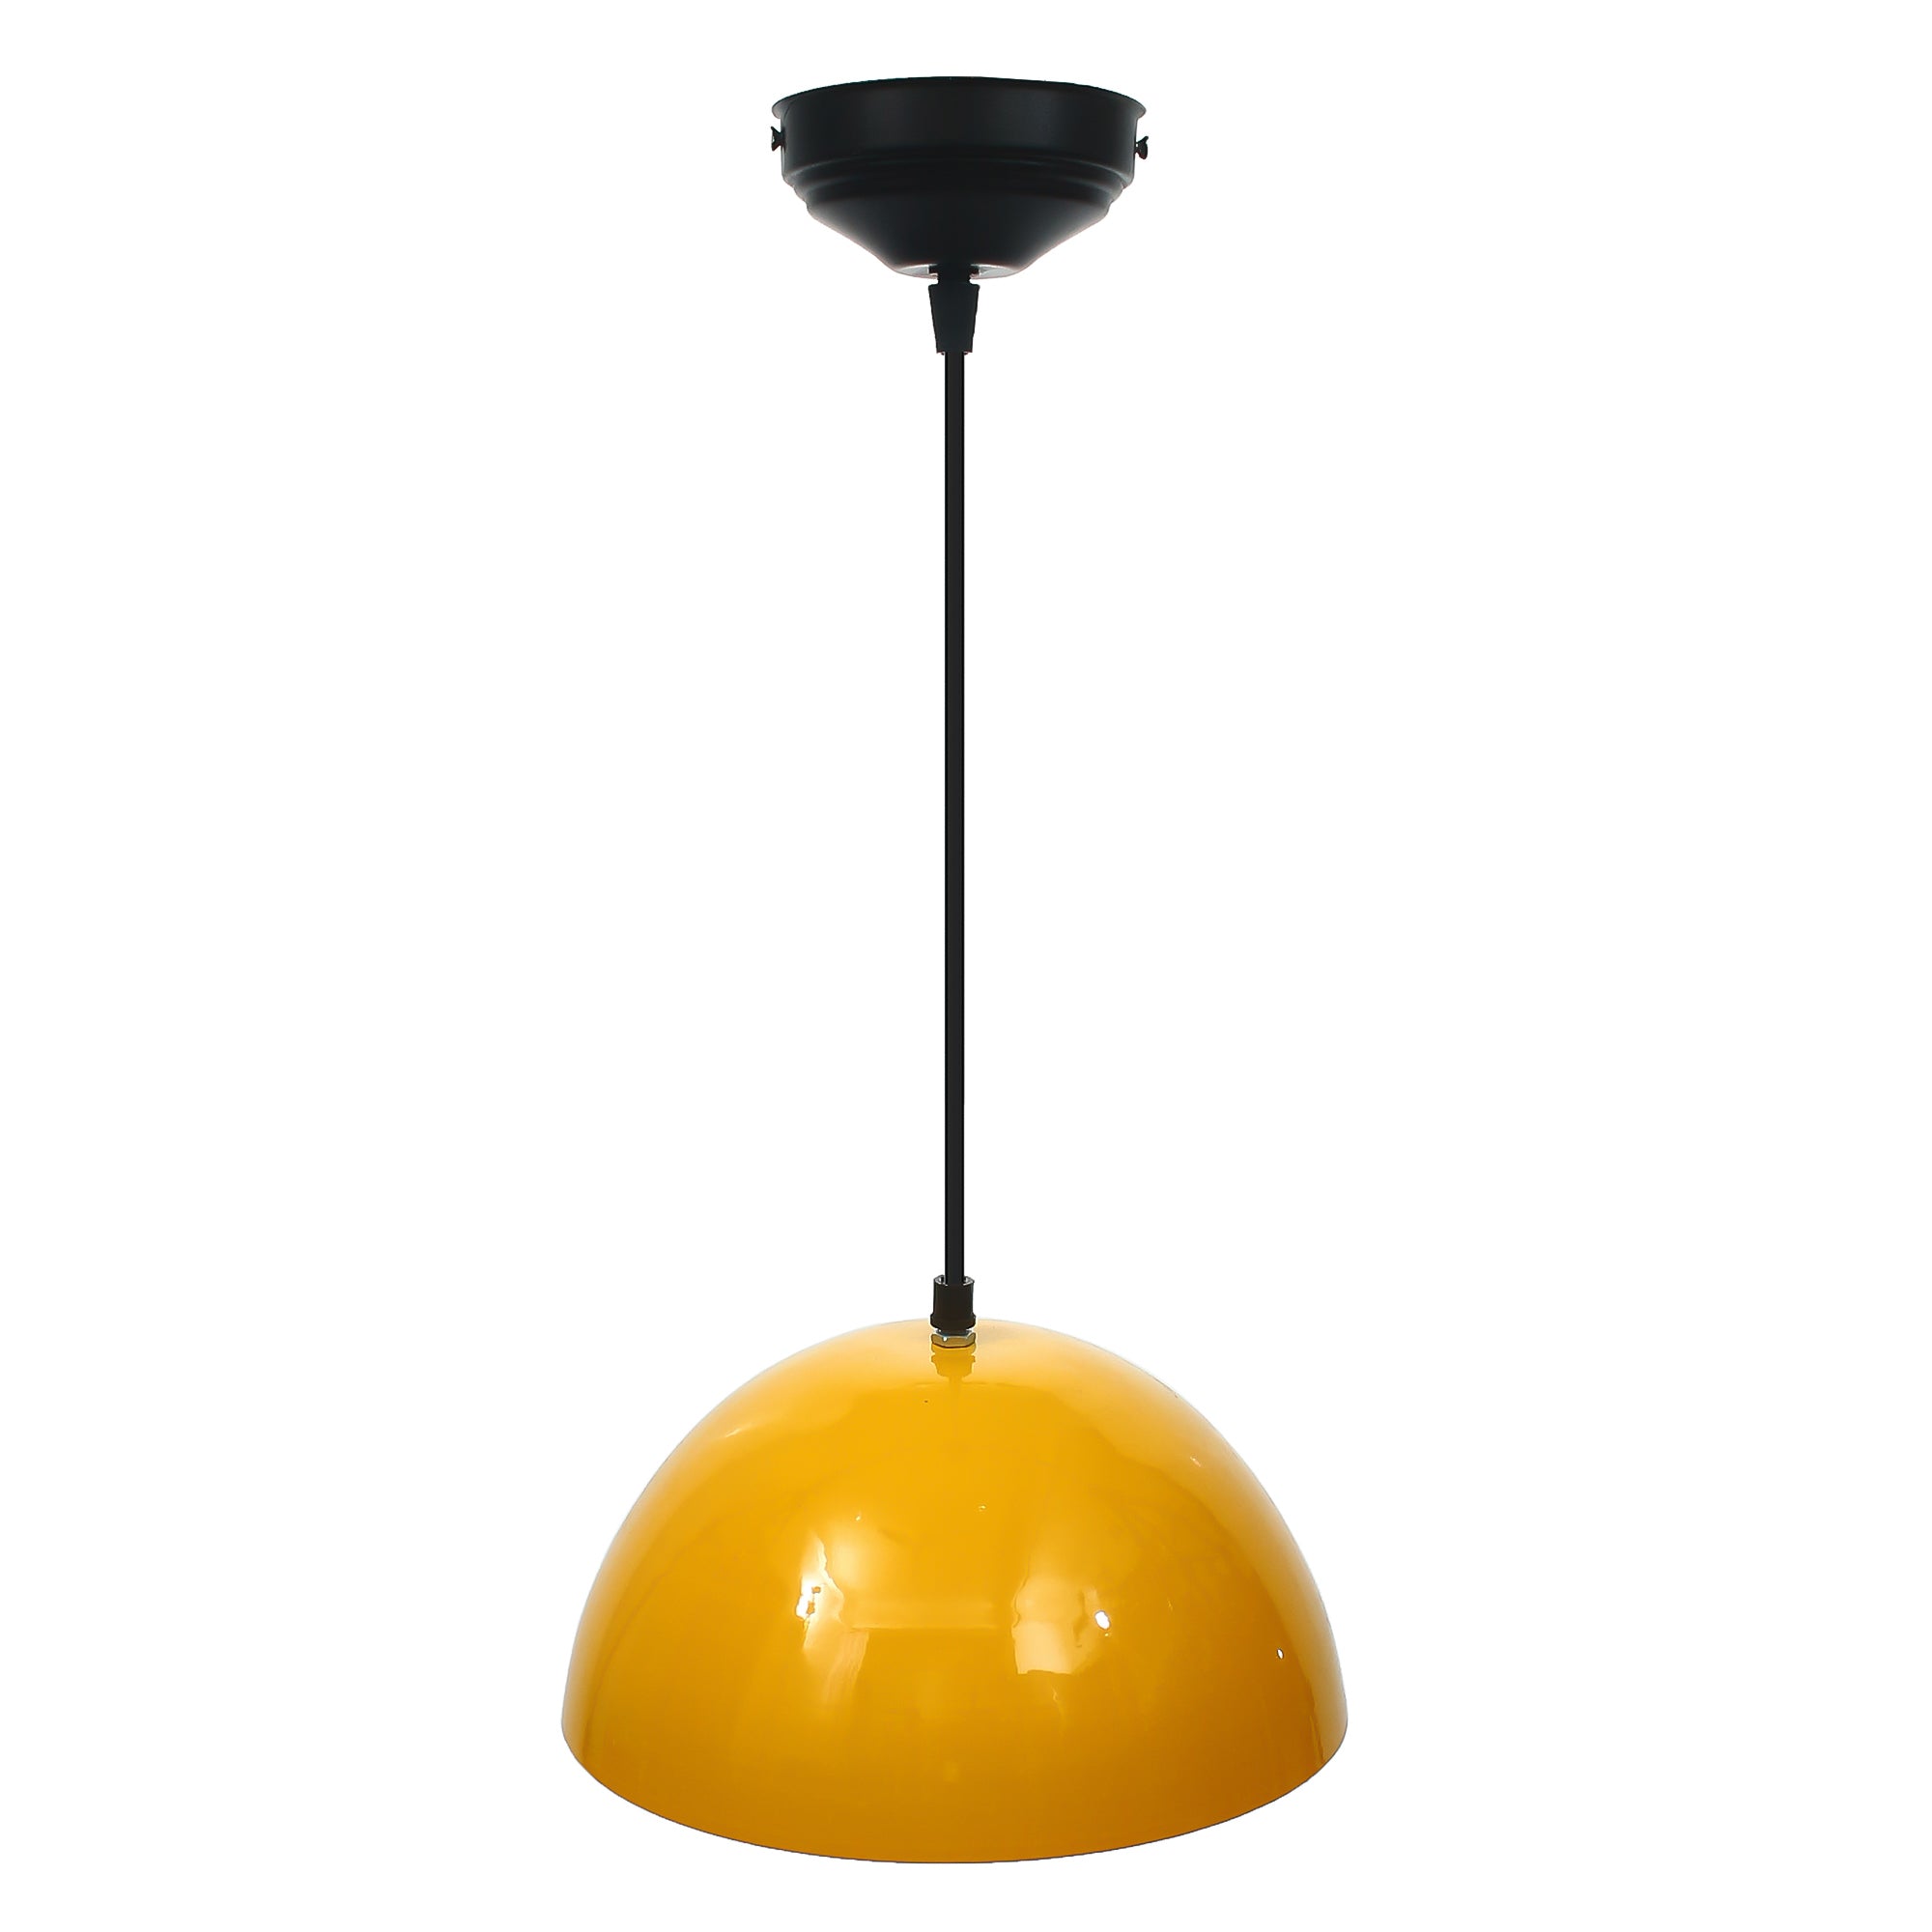 Shining Yellow Glossy Finish Pendant Light, 10" Diameter Ceiling Hanging Lamp for Home/Living Room/Offices/Restaurants 4